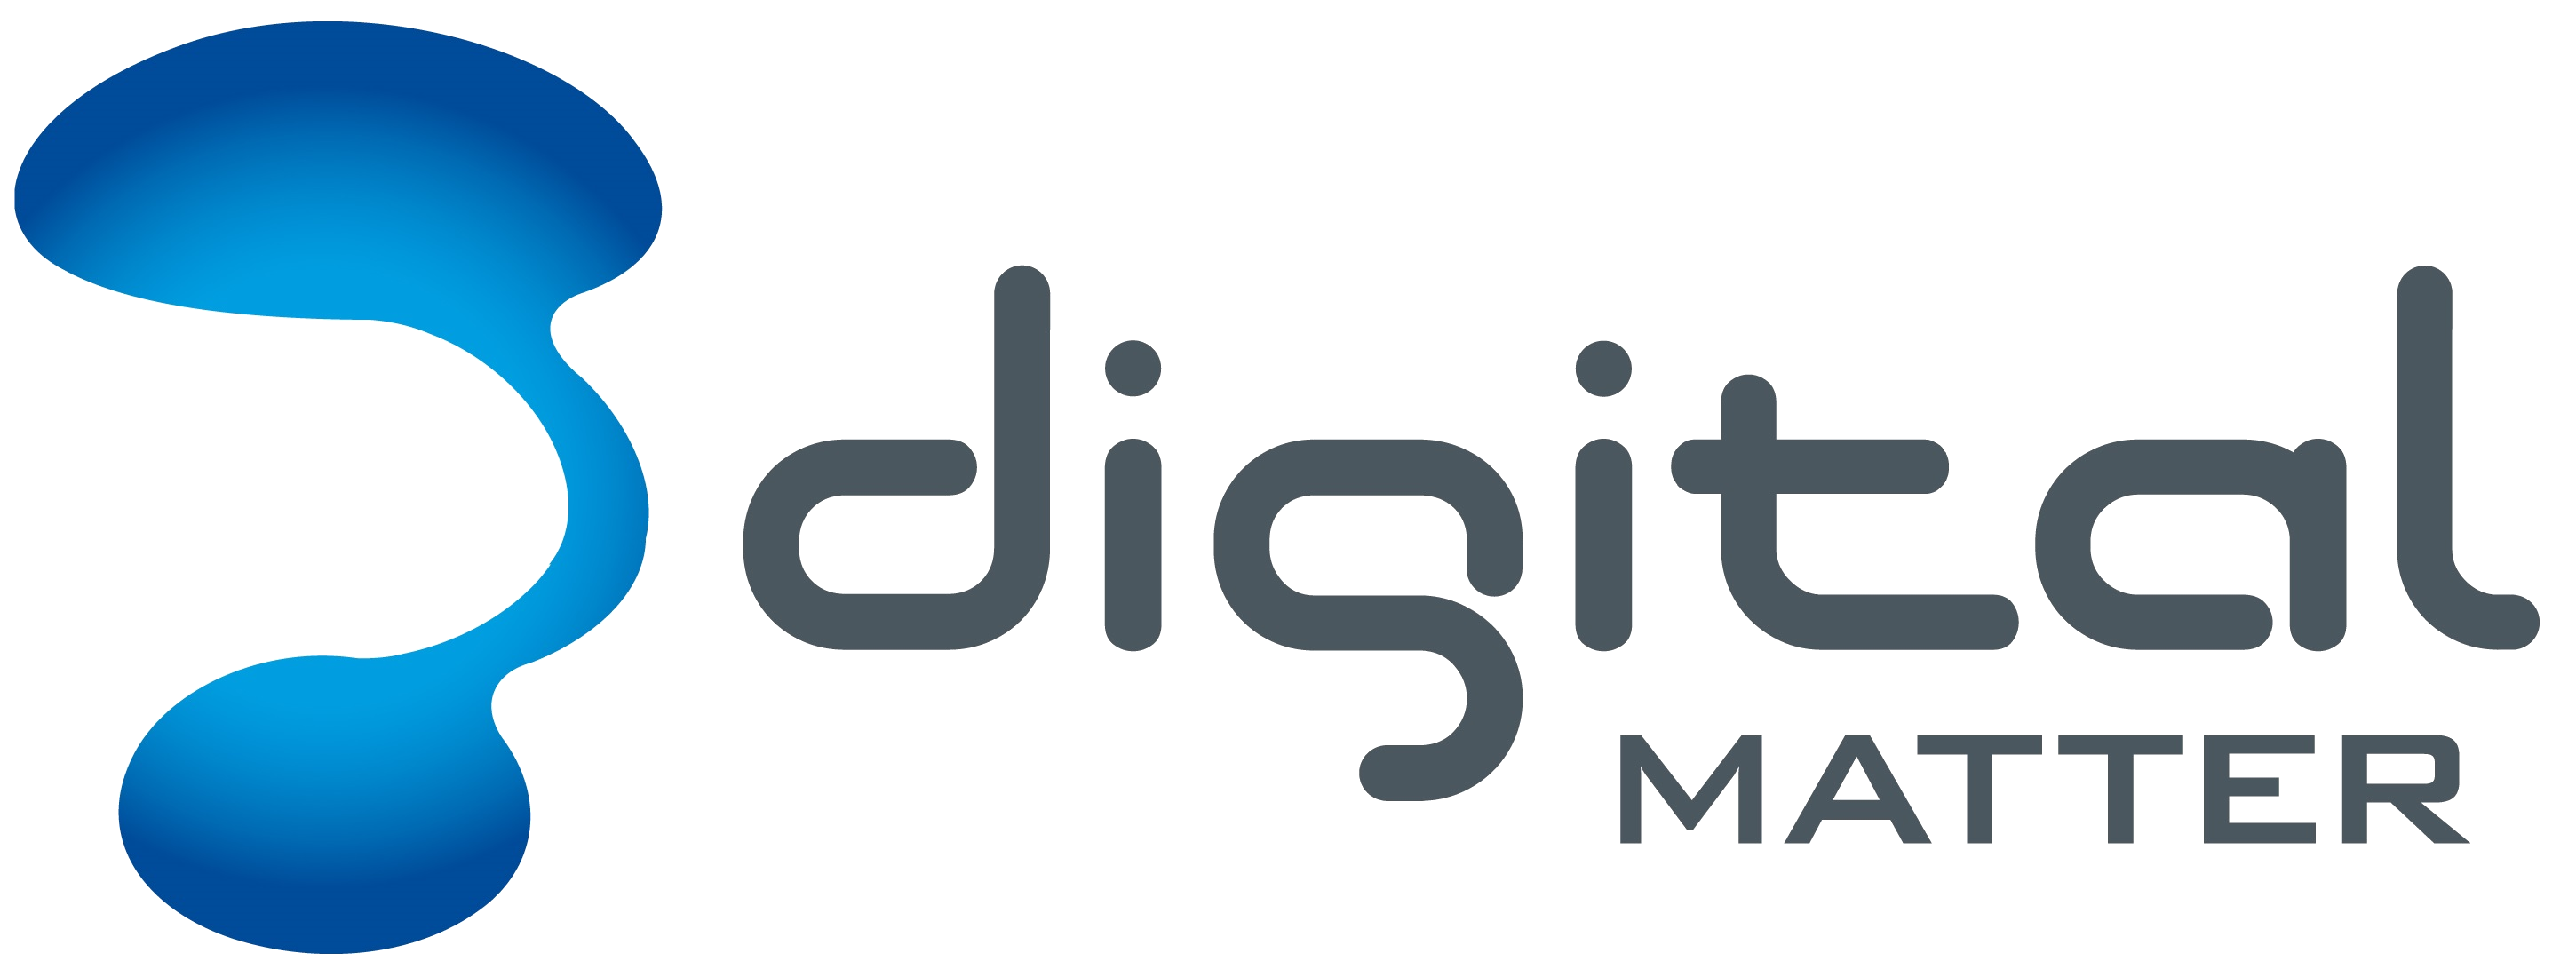 digital matter logo